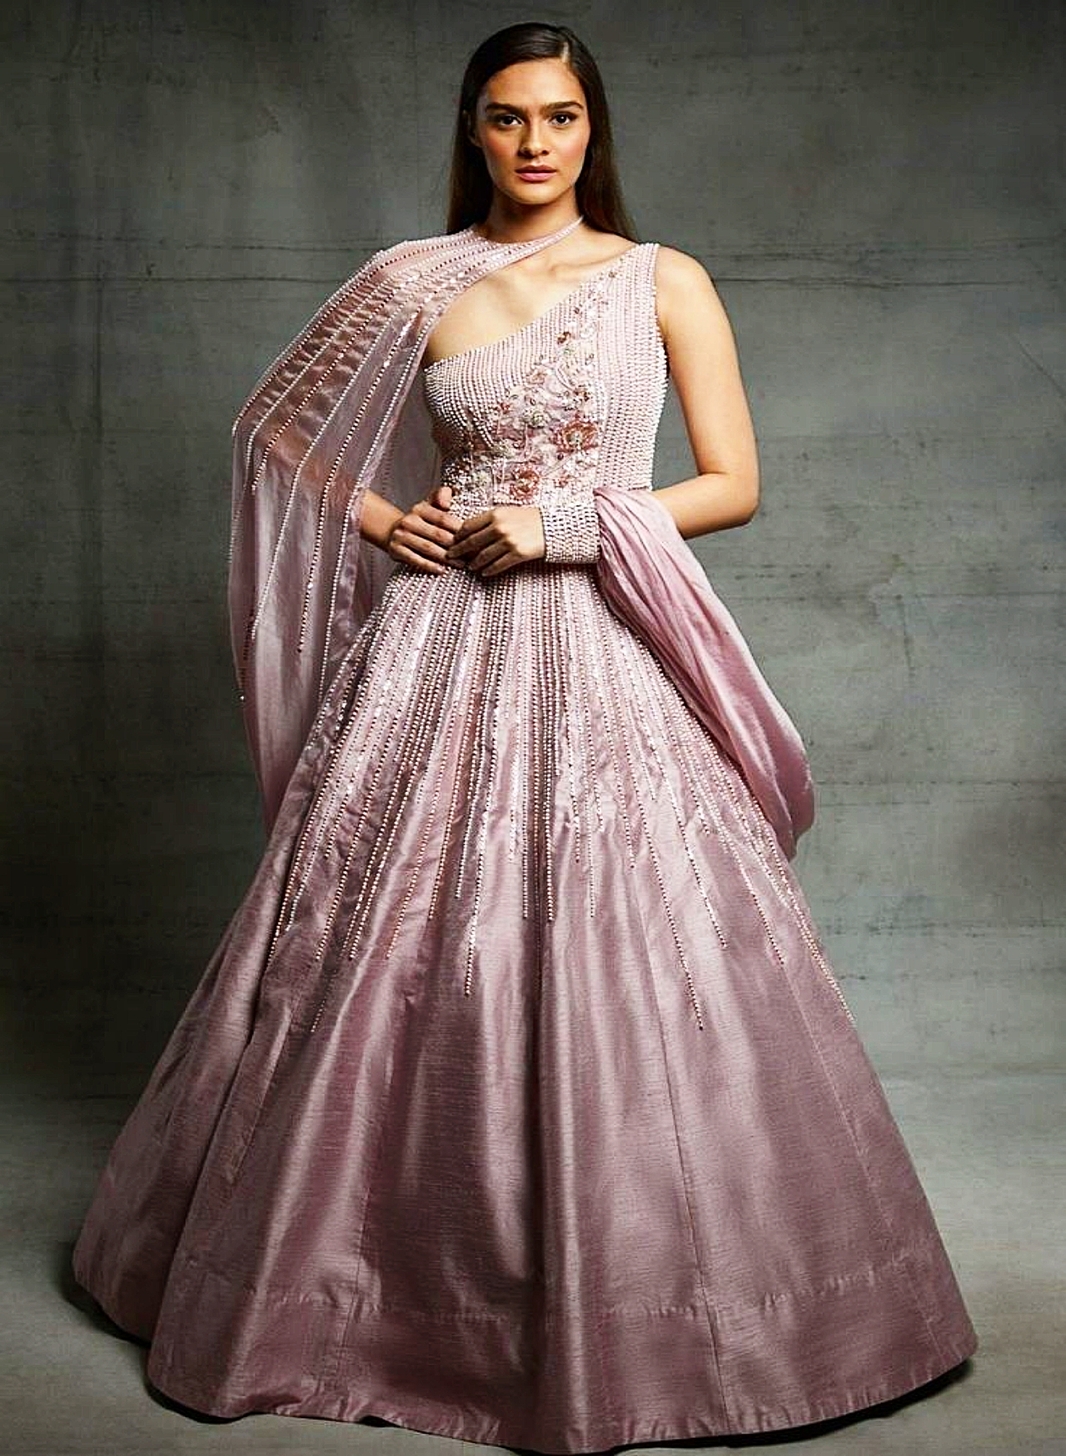 A new era of wedding dress shopping | Fashion News - The Indian Express